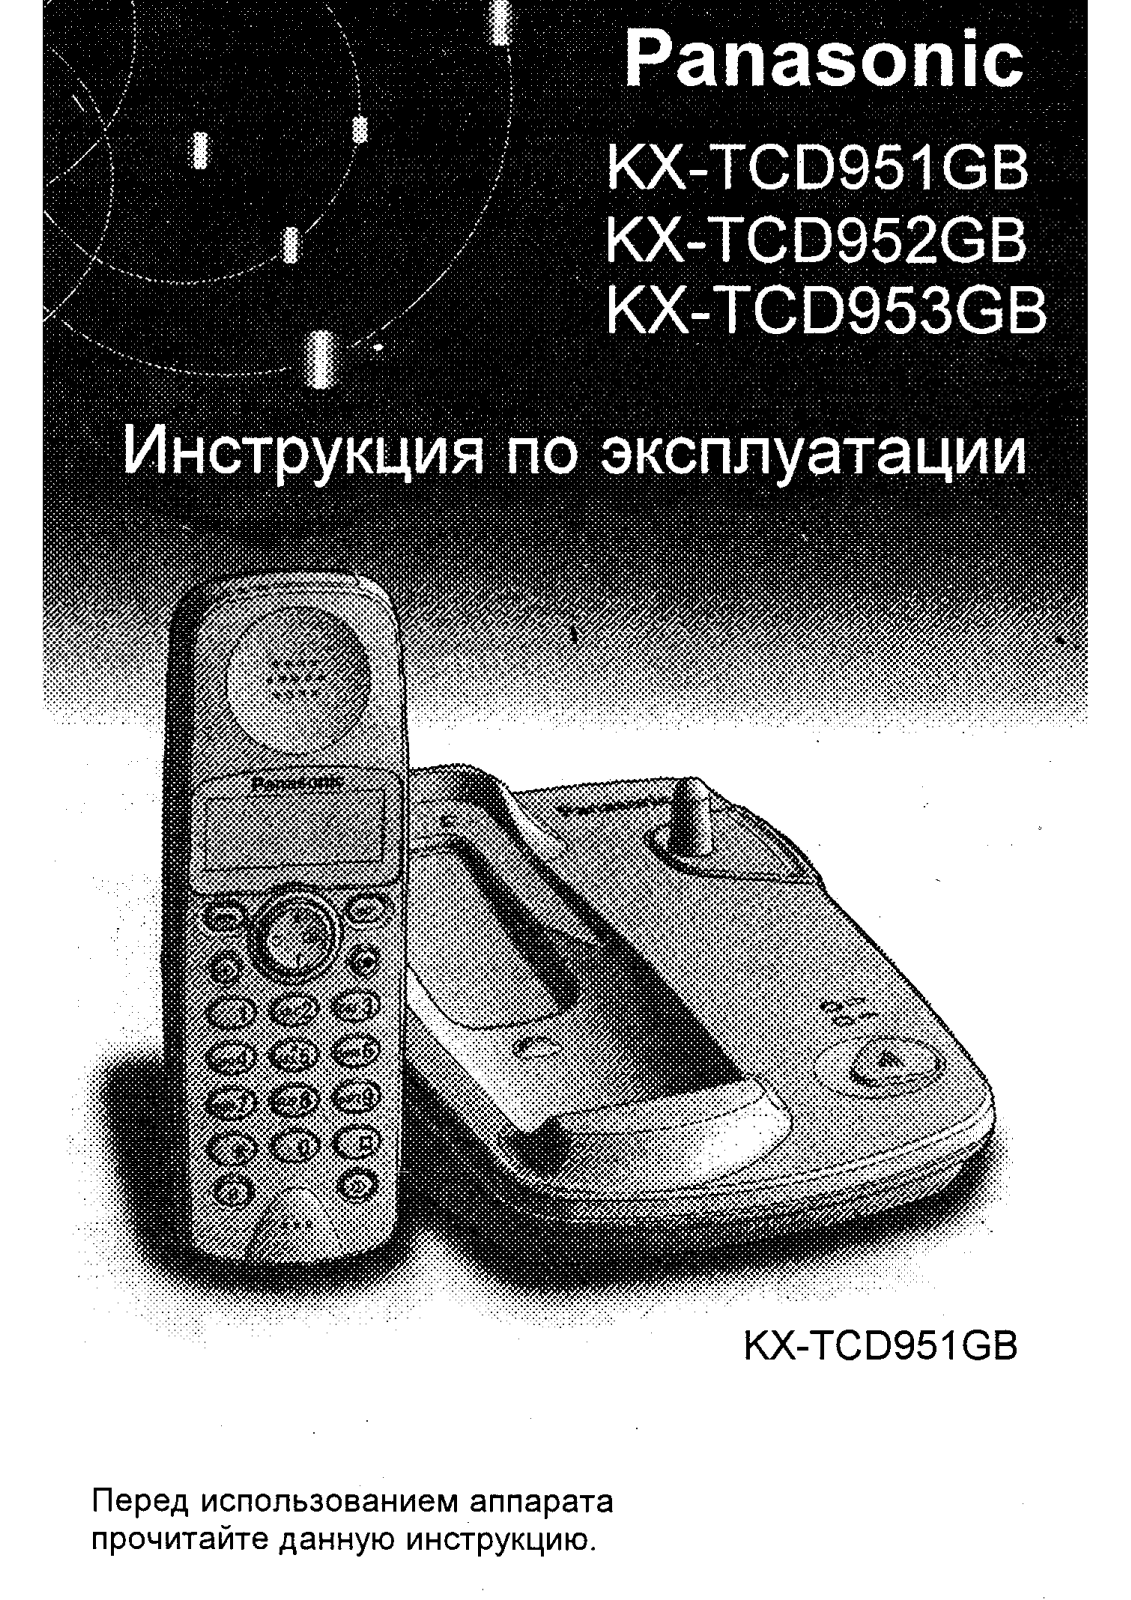 Panasonic KX-TCD953GB User Manual